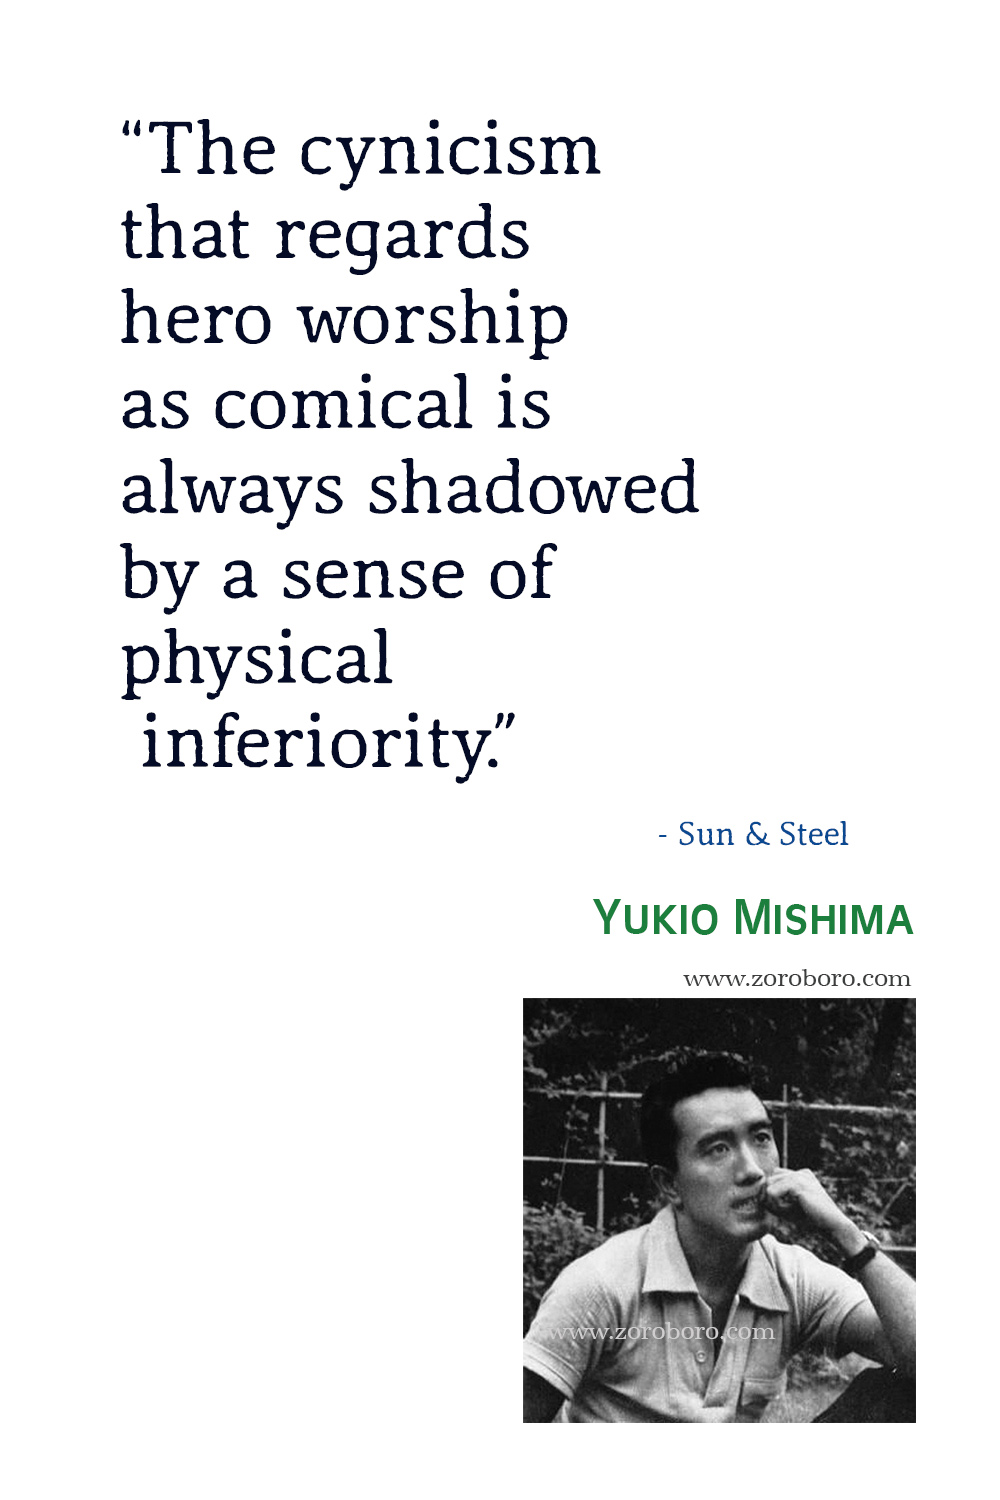 Yukio Mishima Quotes, Yukio Mishima Books, Confessions of a Mask, Spring Snow Novel by Yukio Mishima Quotes, Yukio Mishima Quotes.